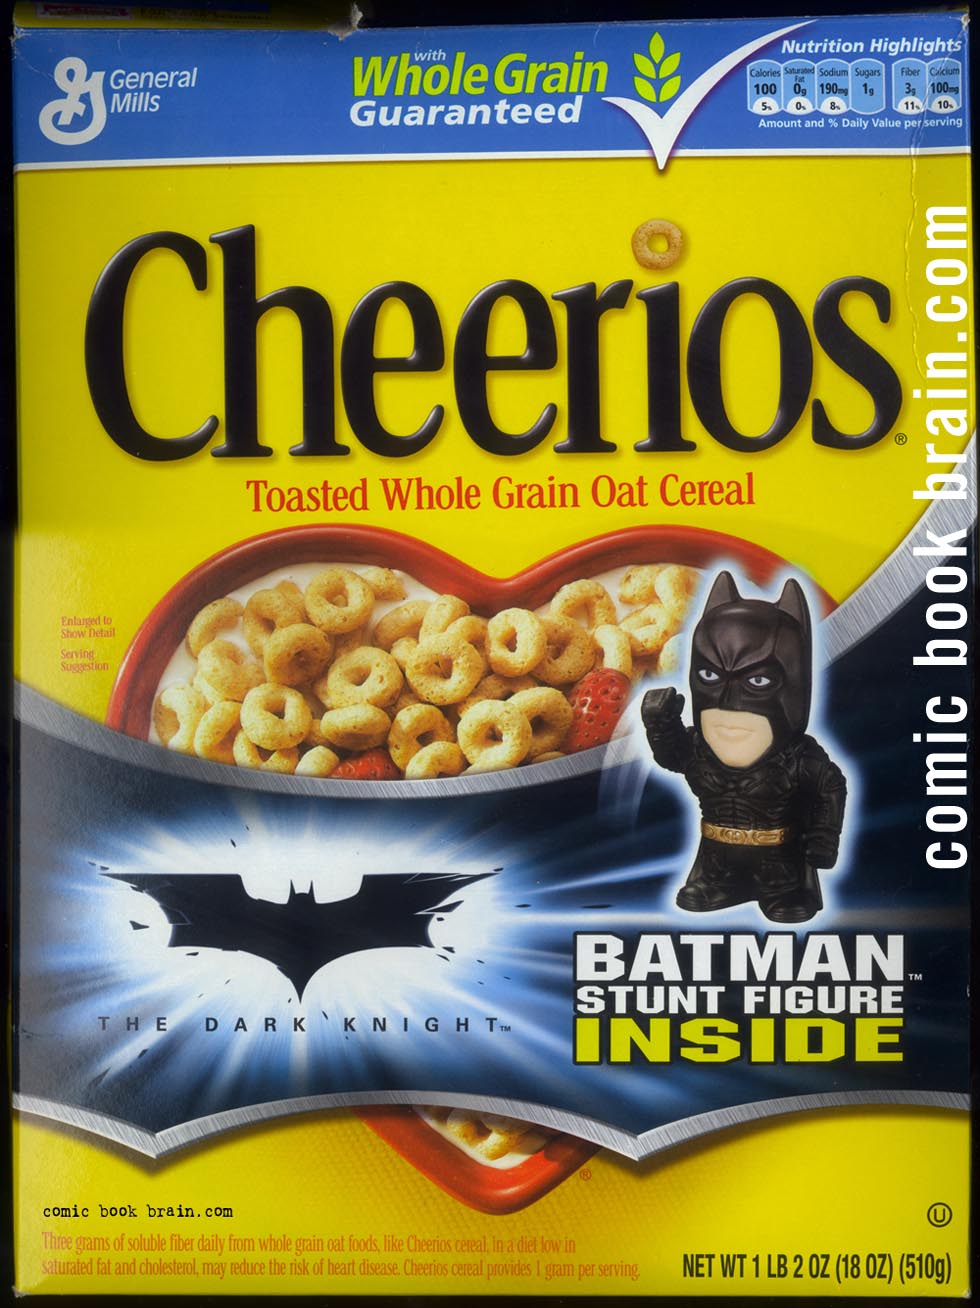 Cheerios the Dark Knight cereal